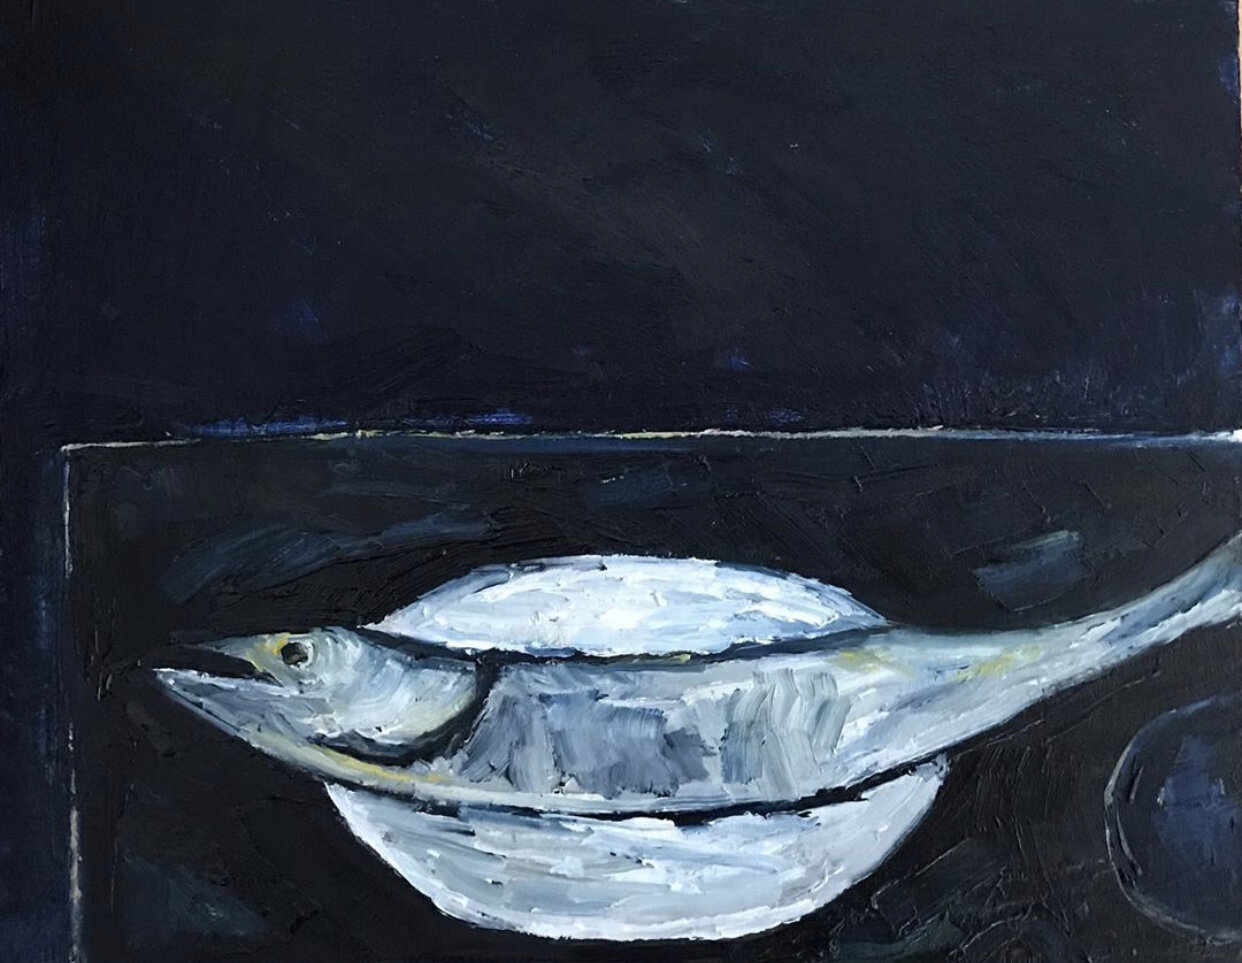 Linda Greedy 'Holy Mackerel (homage to William Scott’s Mackerel on a plate)' 2020 oil on timber 20 x 25cm $300.00